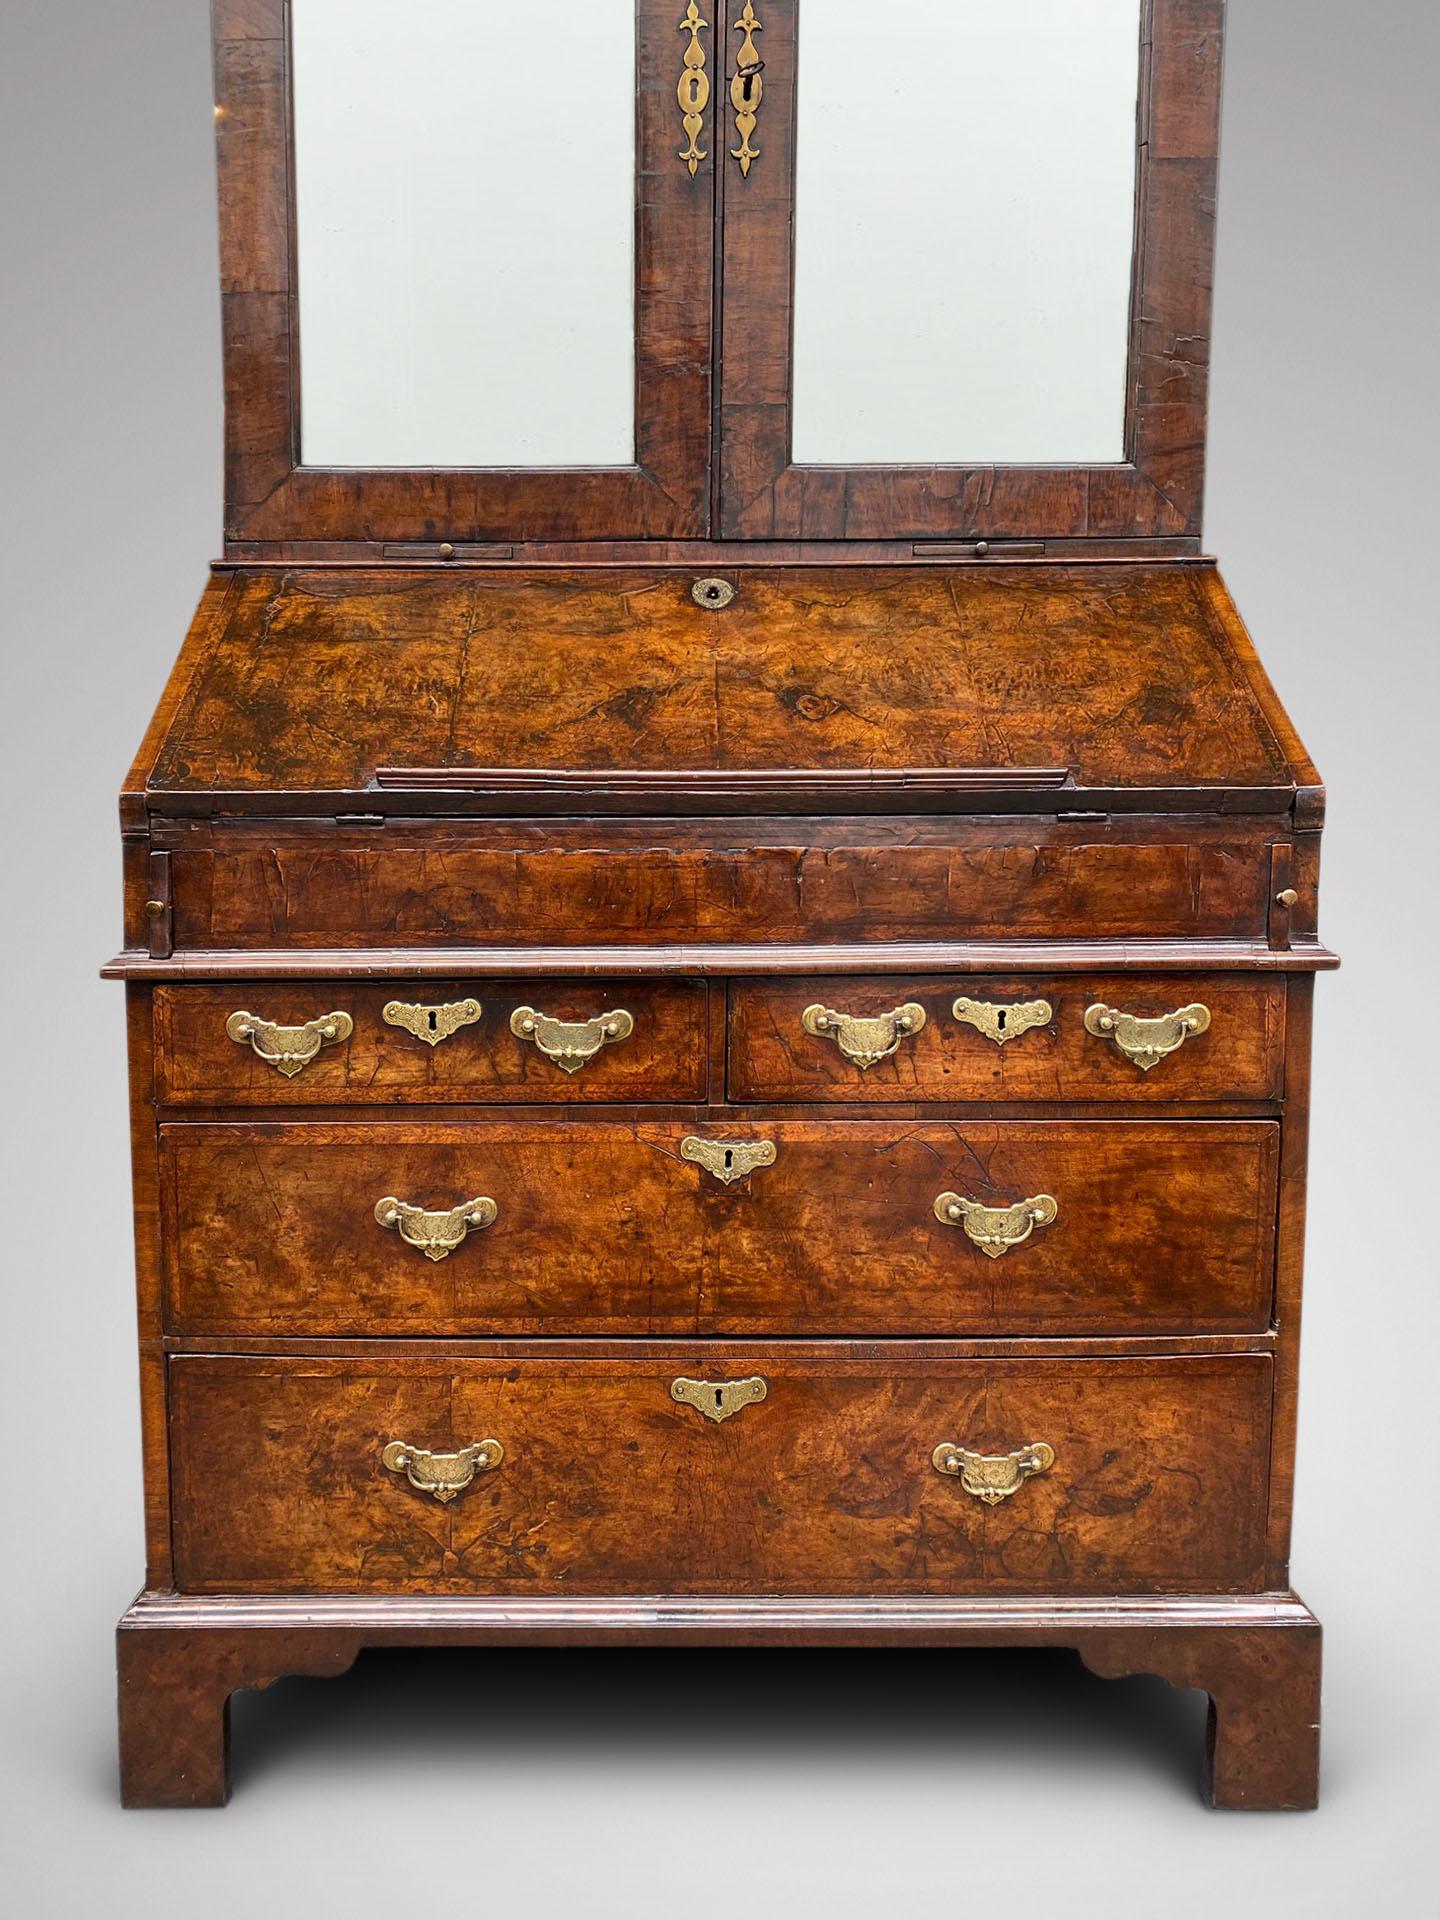 British Very Fine 18th Century George I Period Burr Walnut Bureau Bookcase For Sale